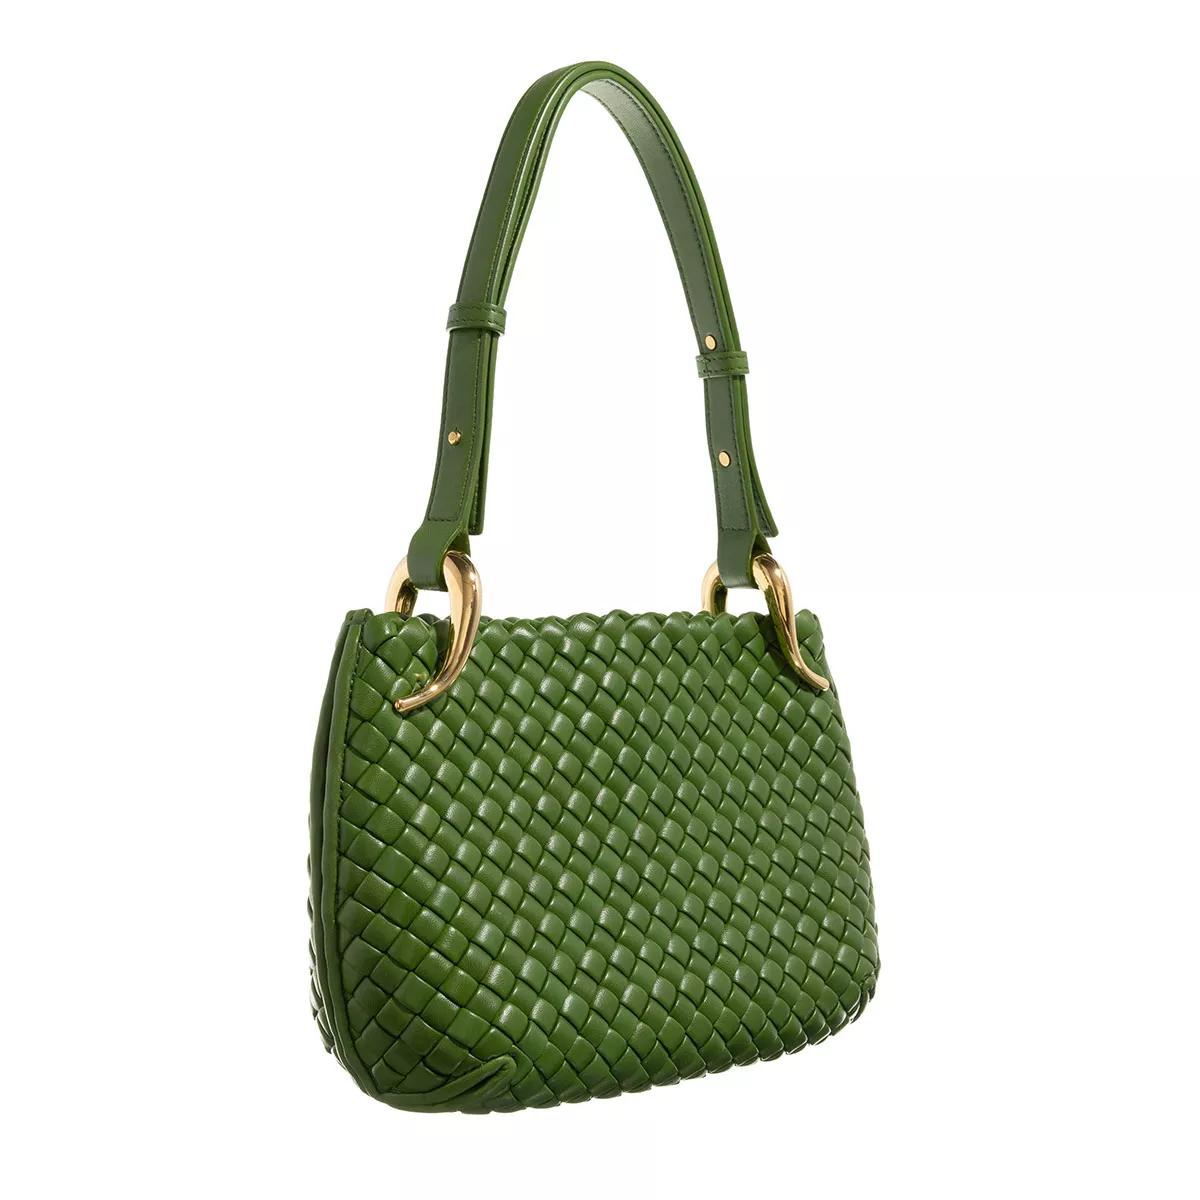 Bottega Veneta Hobo bags Small Clicker Shoulder Bag in groen